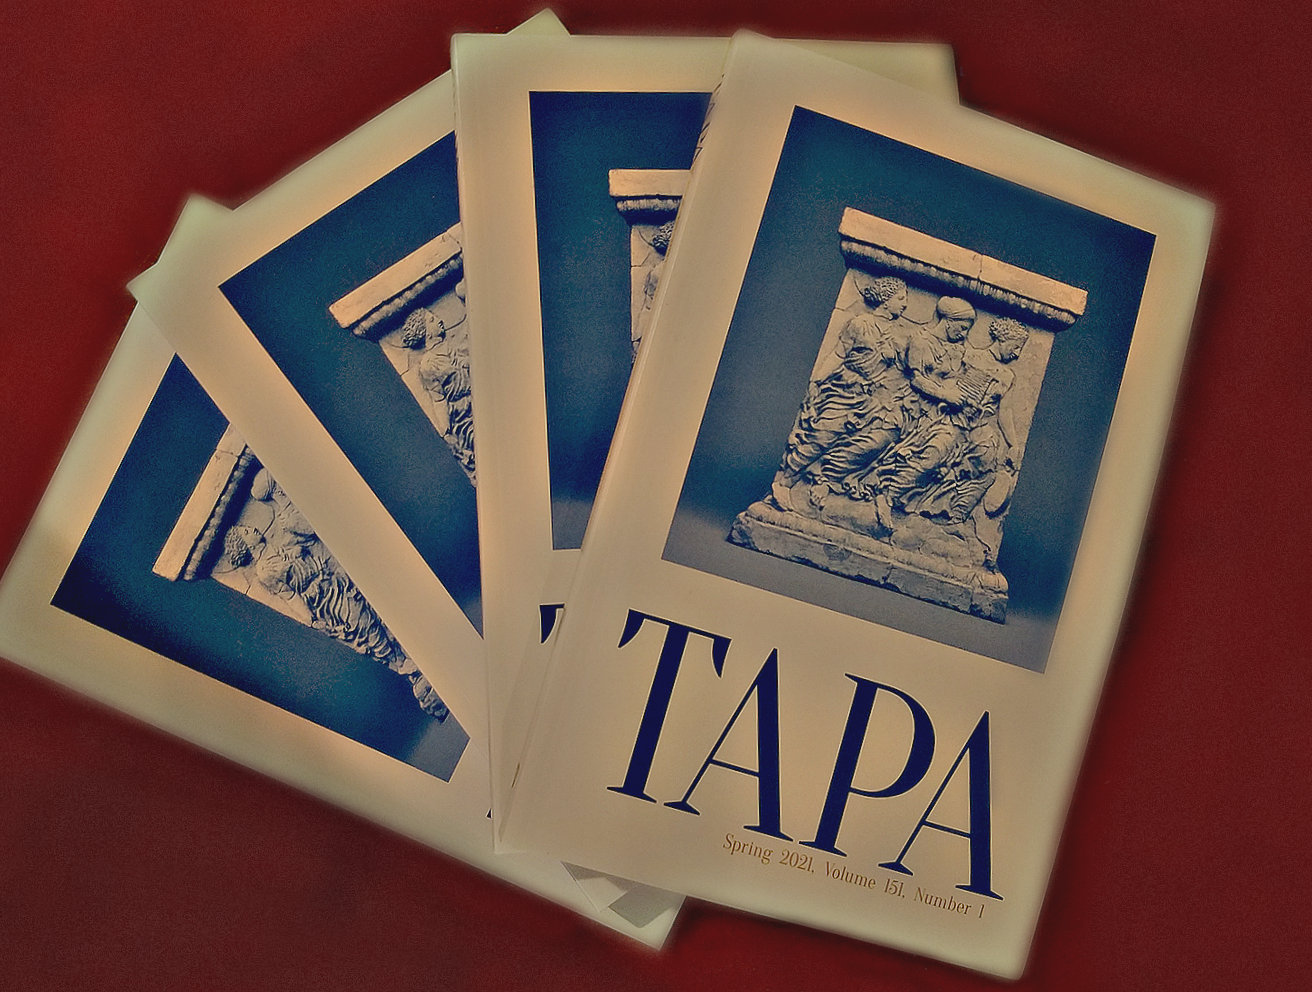 TAPA Books Fanned